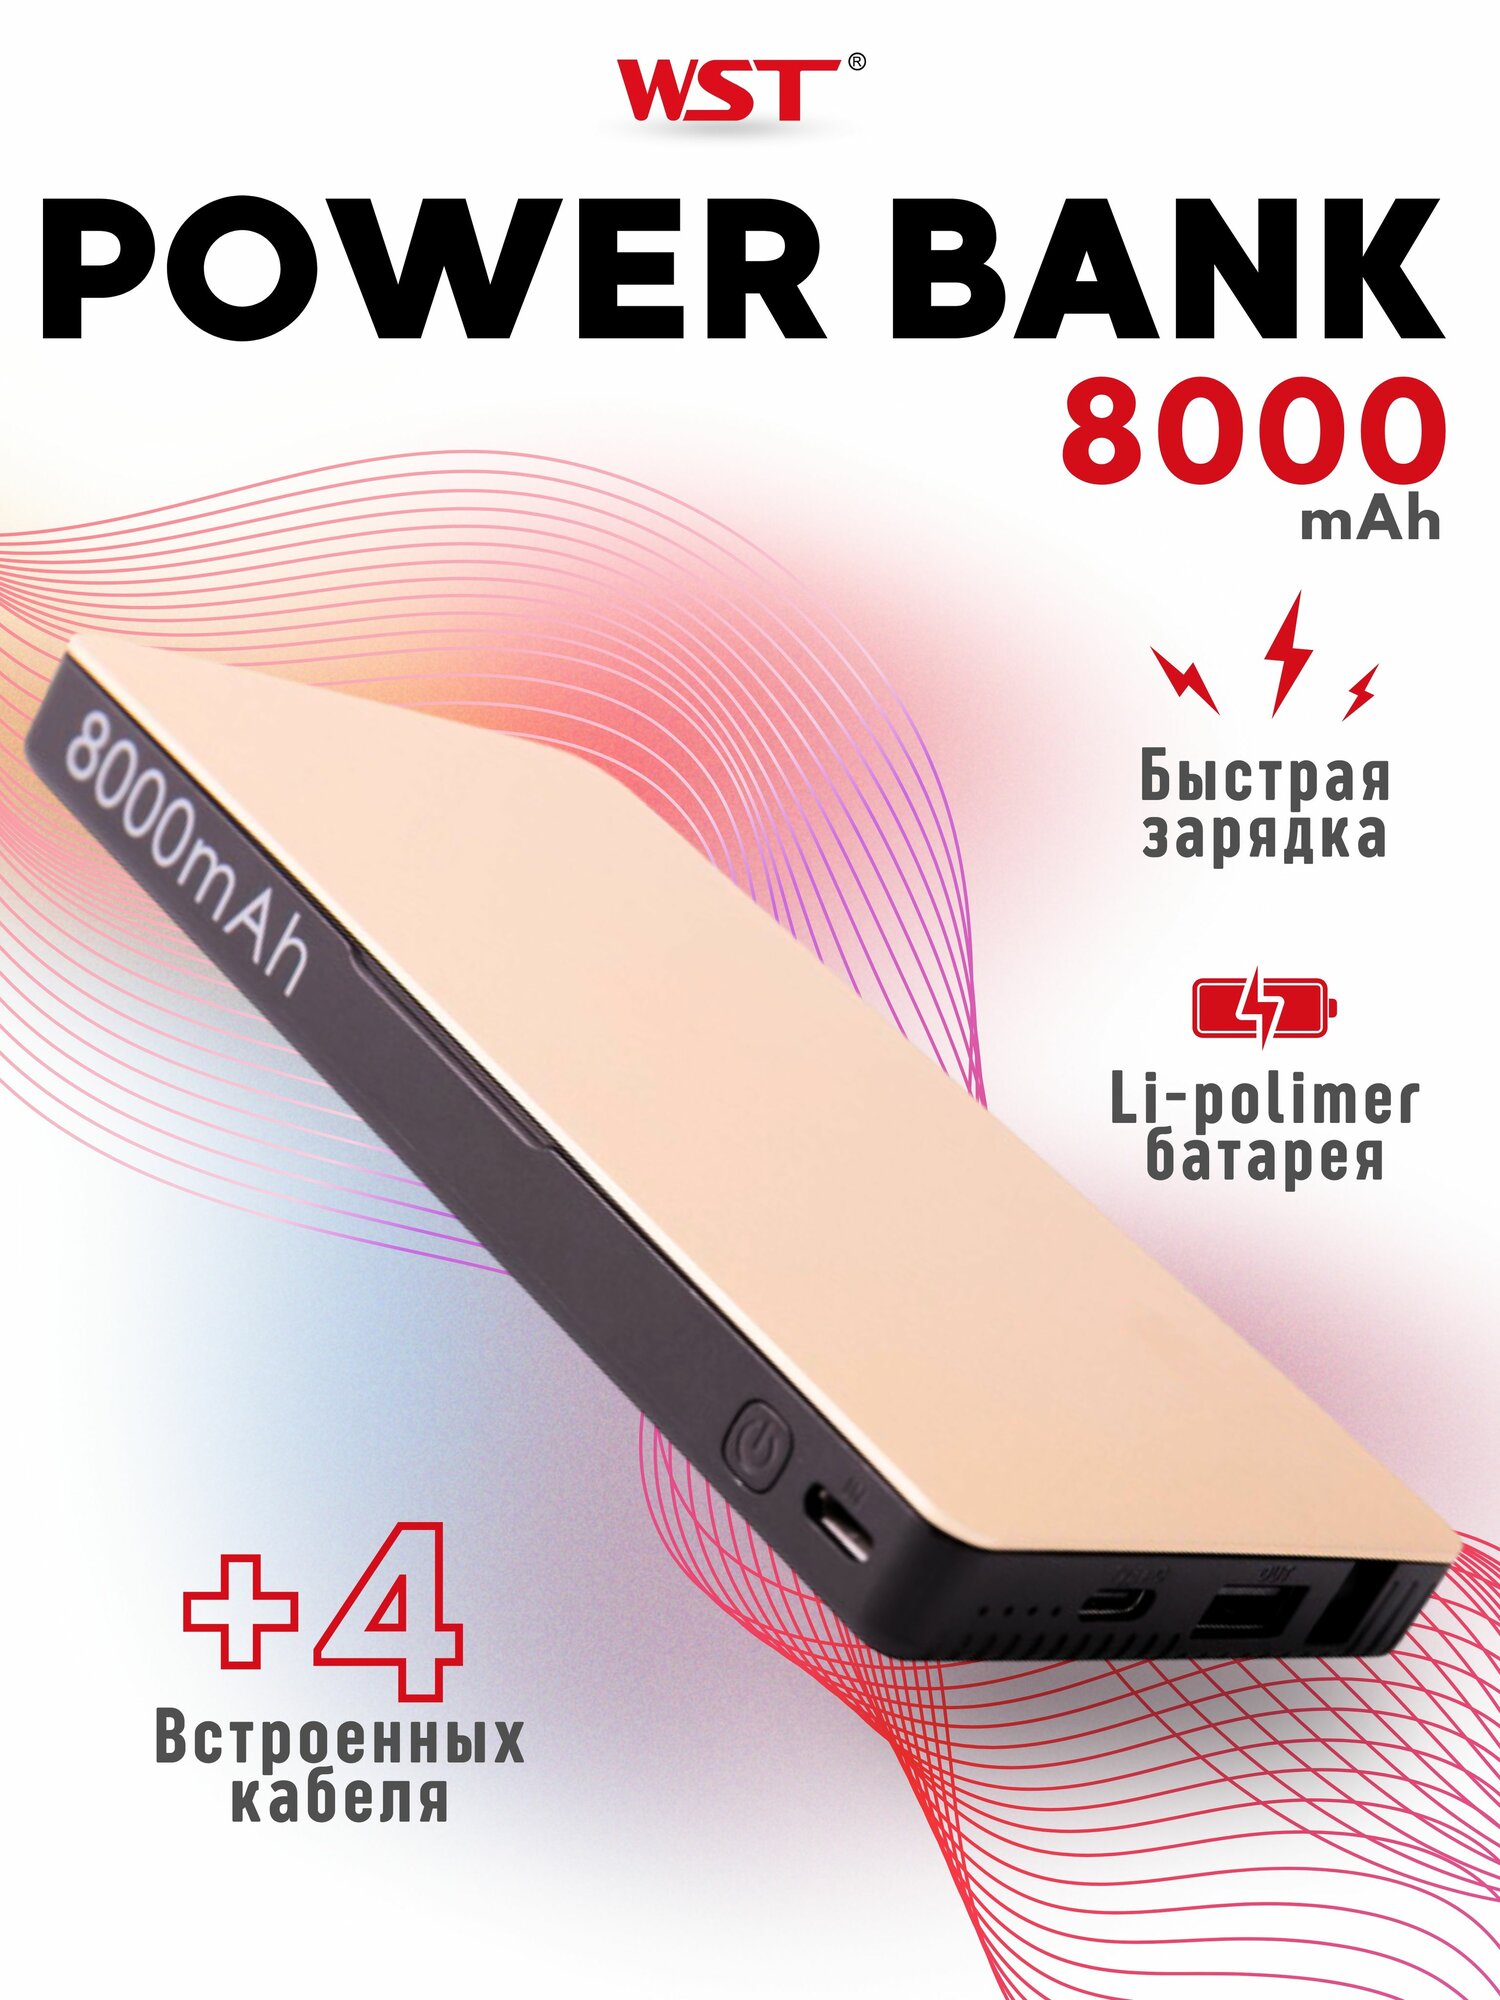 PowerBank Внешний аккумулятор WST WP932 8000 mAh (Встроенные провода type-c micro usb lighting)